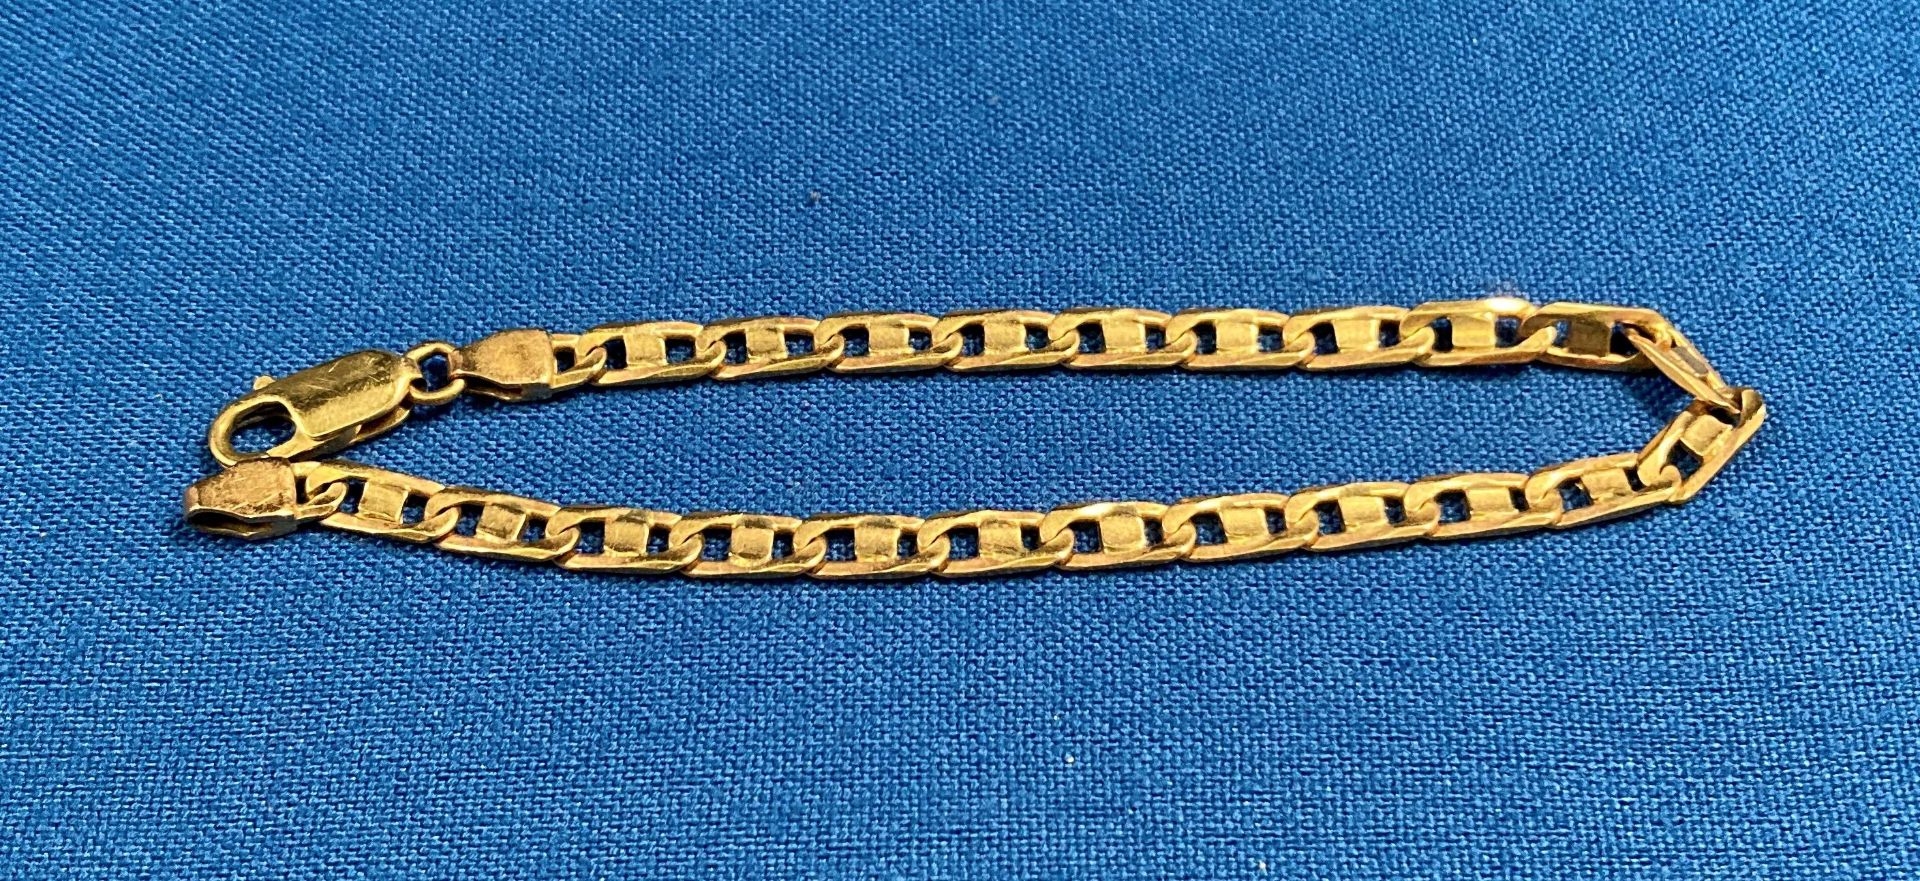 9ct gold (375) anchor link bracelet, 7" long. Weight: 7.